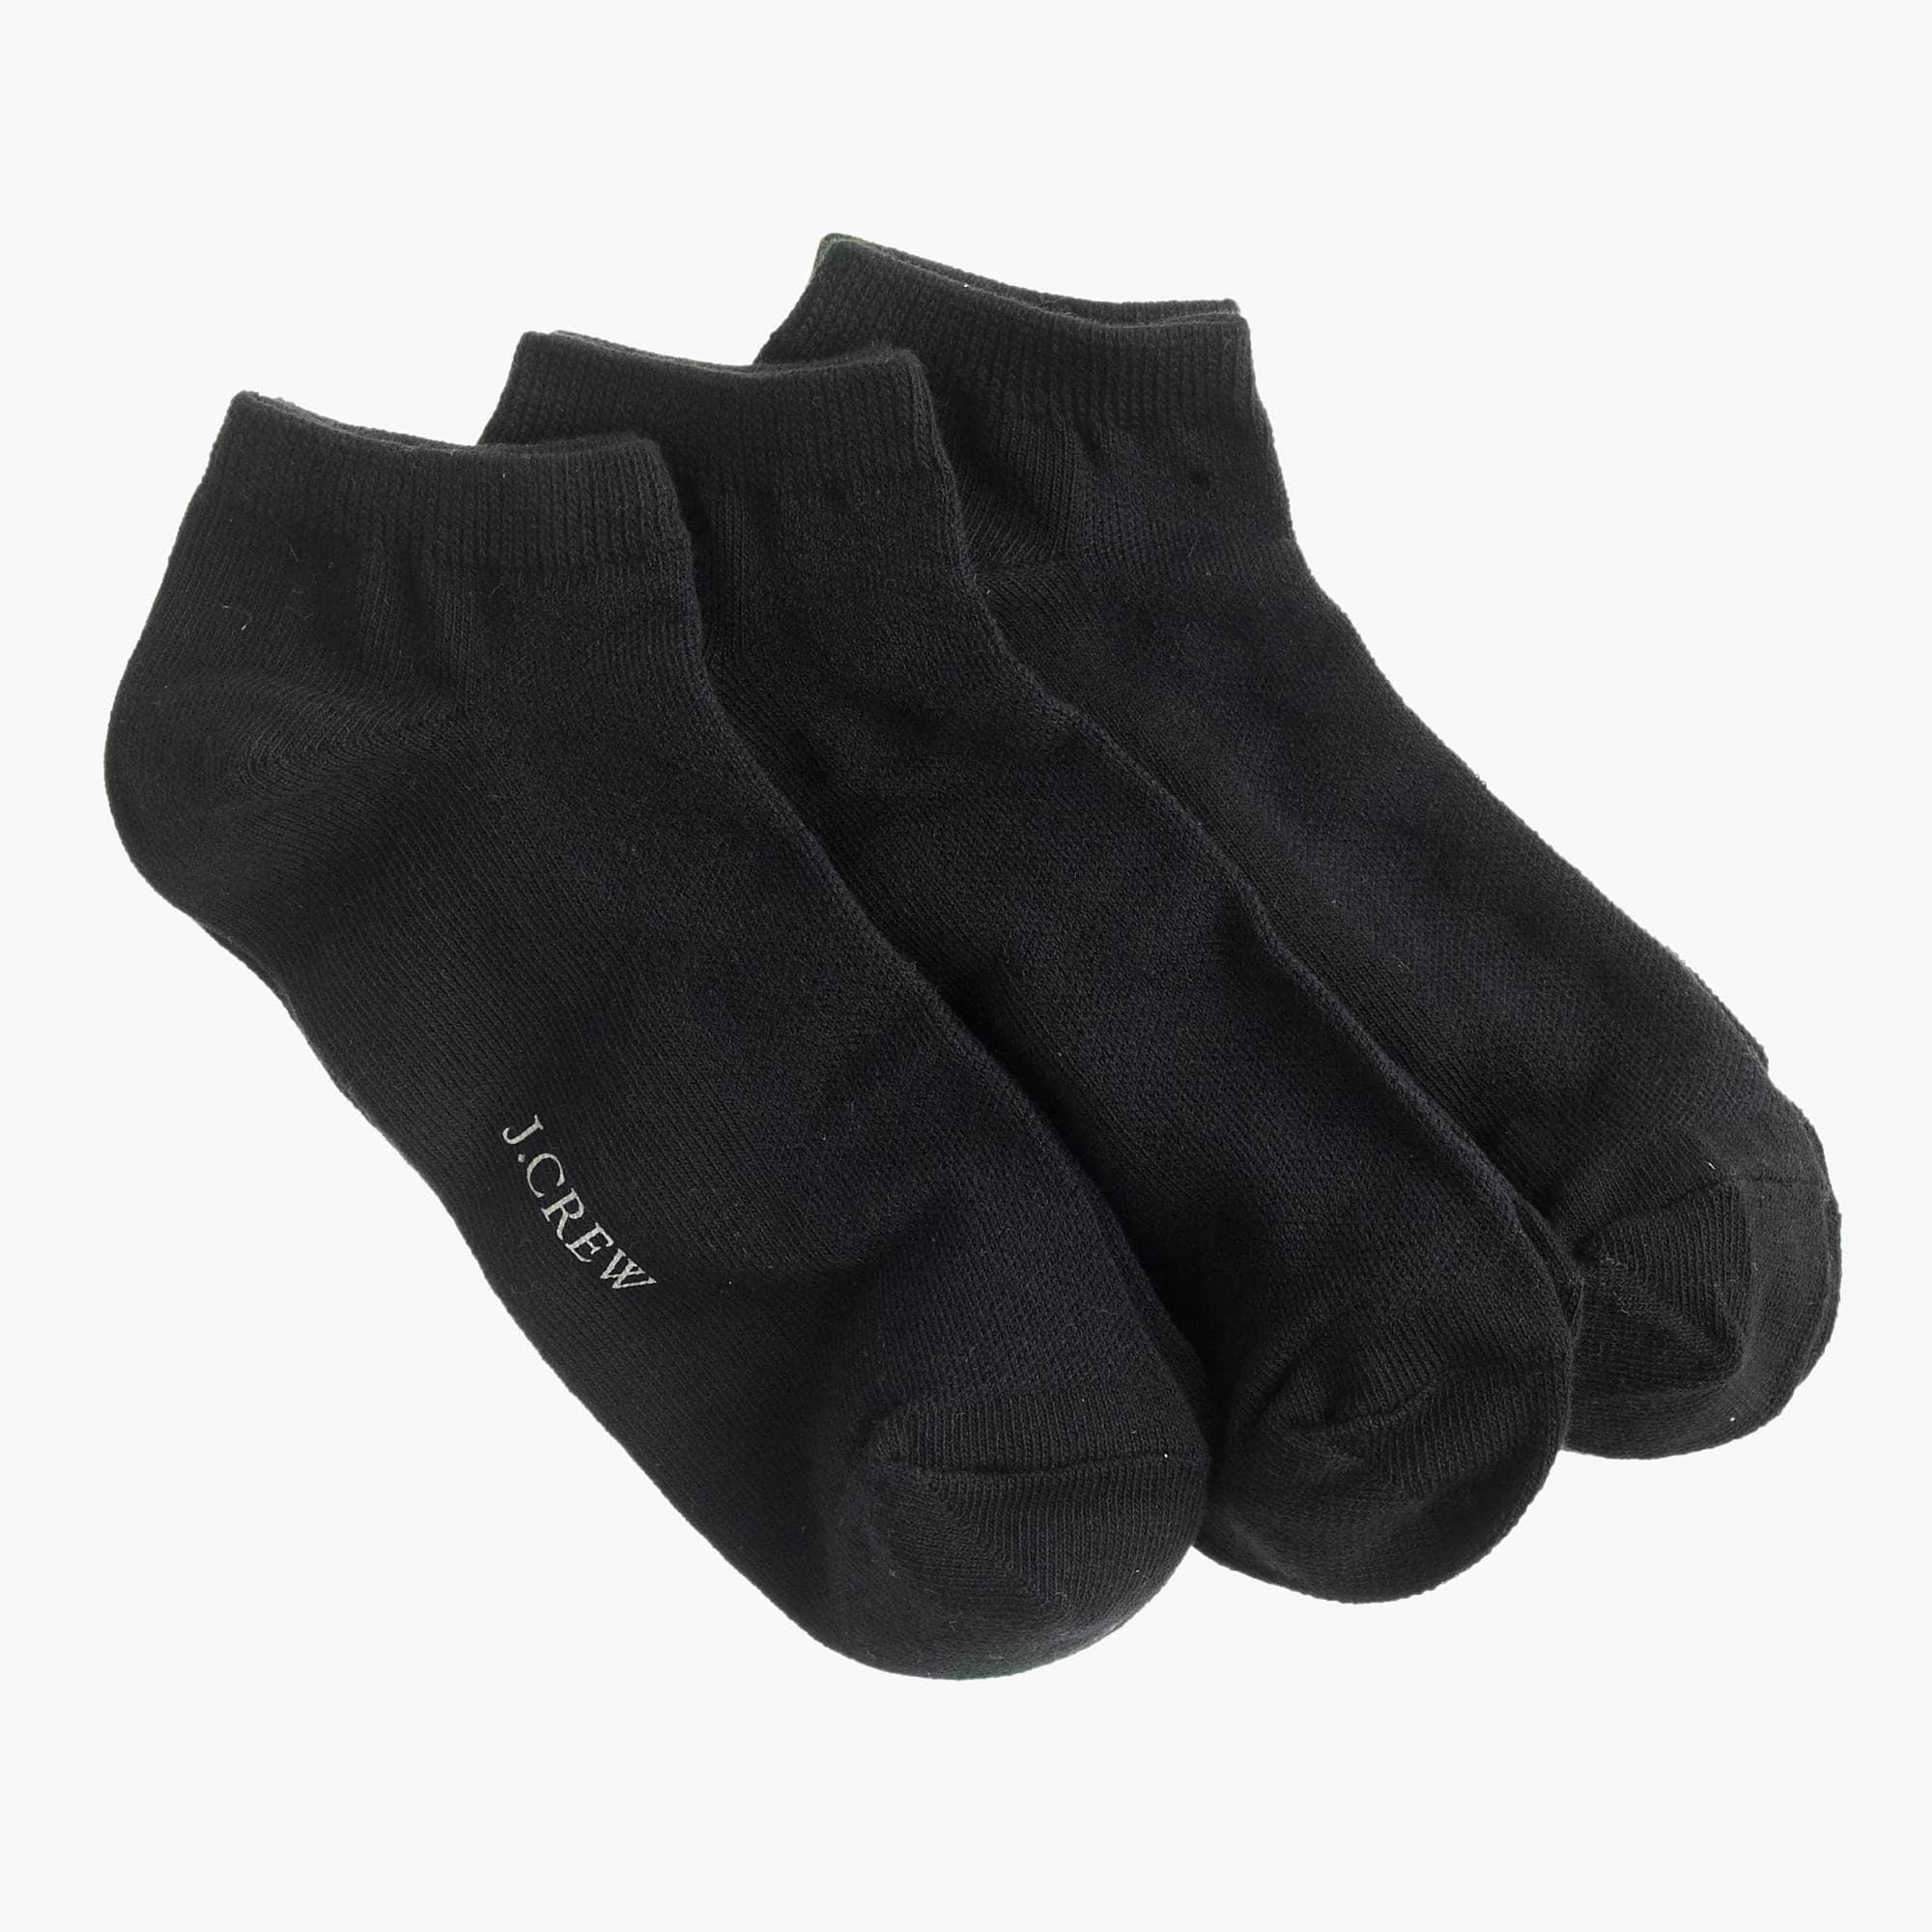 Jcrew Synthetic Ankle Socks Three Pack In Black Lyst 